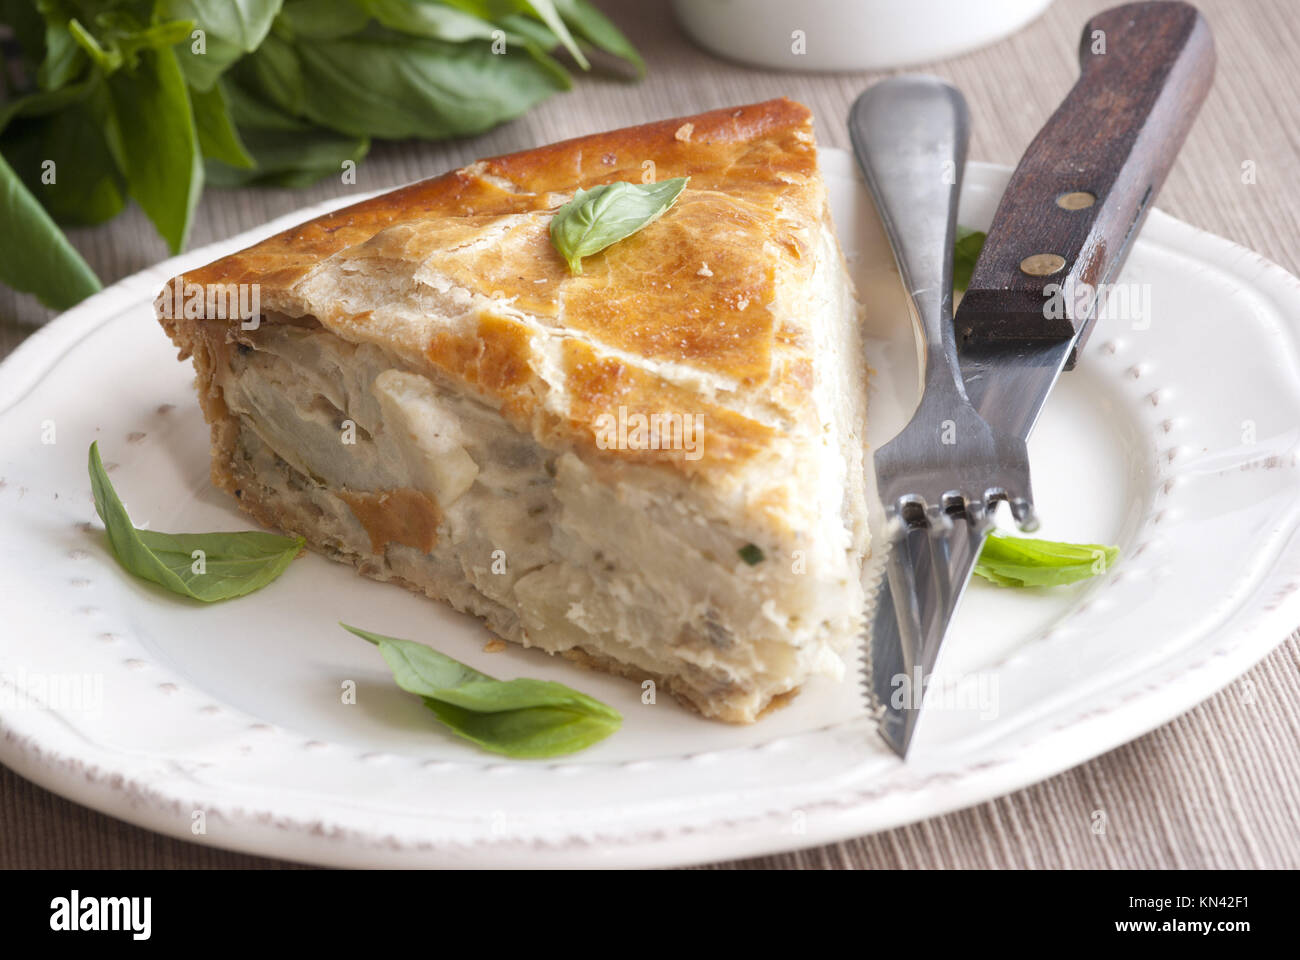 A slice of potato pie on a plate. Stock Photo